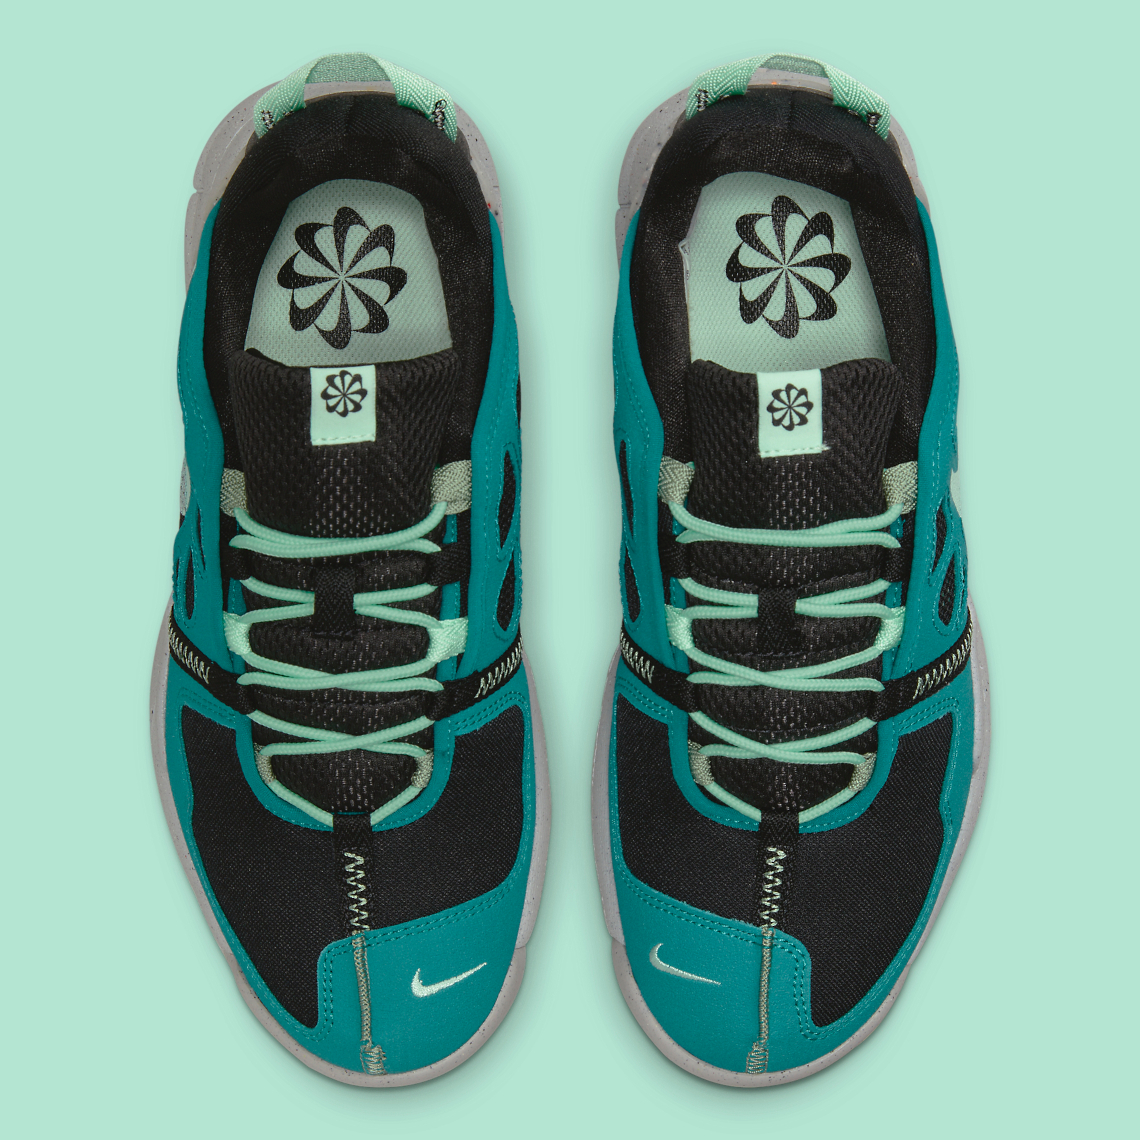 Nike Air Jordan 5 uk 9.5 Cz1757 002 9